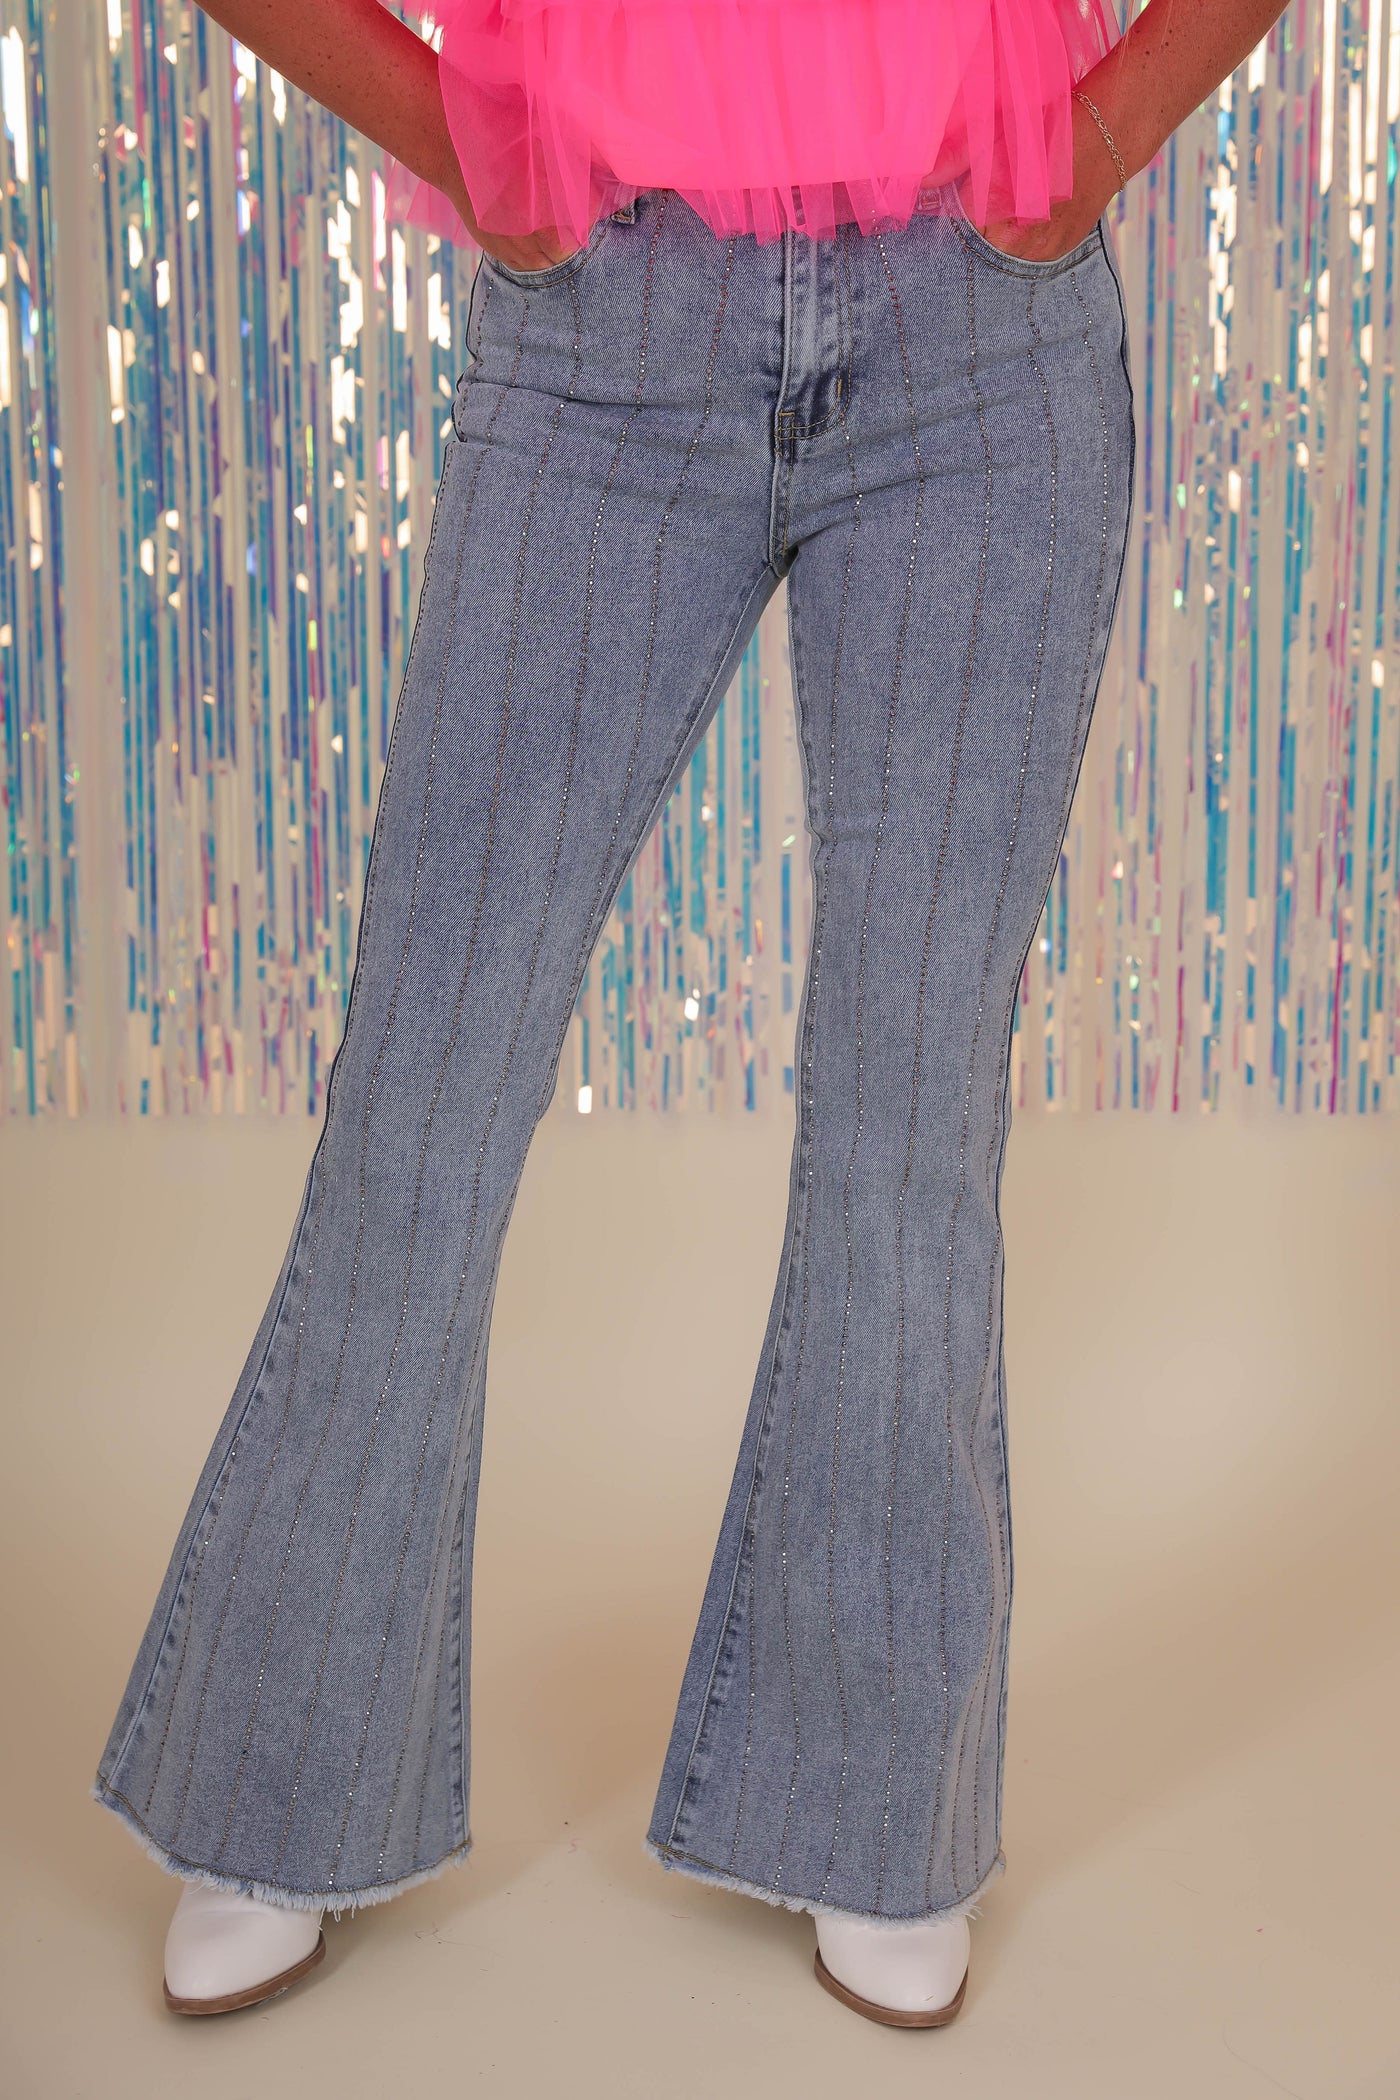 Rhinestone Flare Jeans- Women's Rhinestone Denim- BlueB Rhinestone Jeans